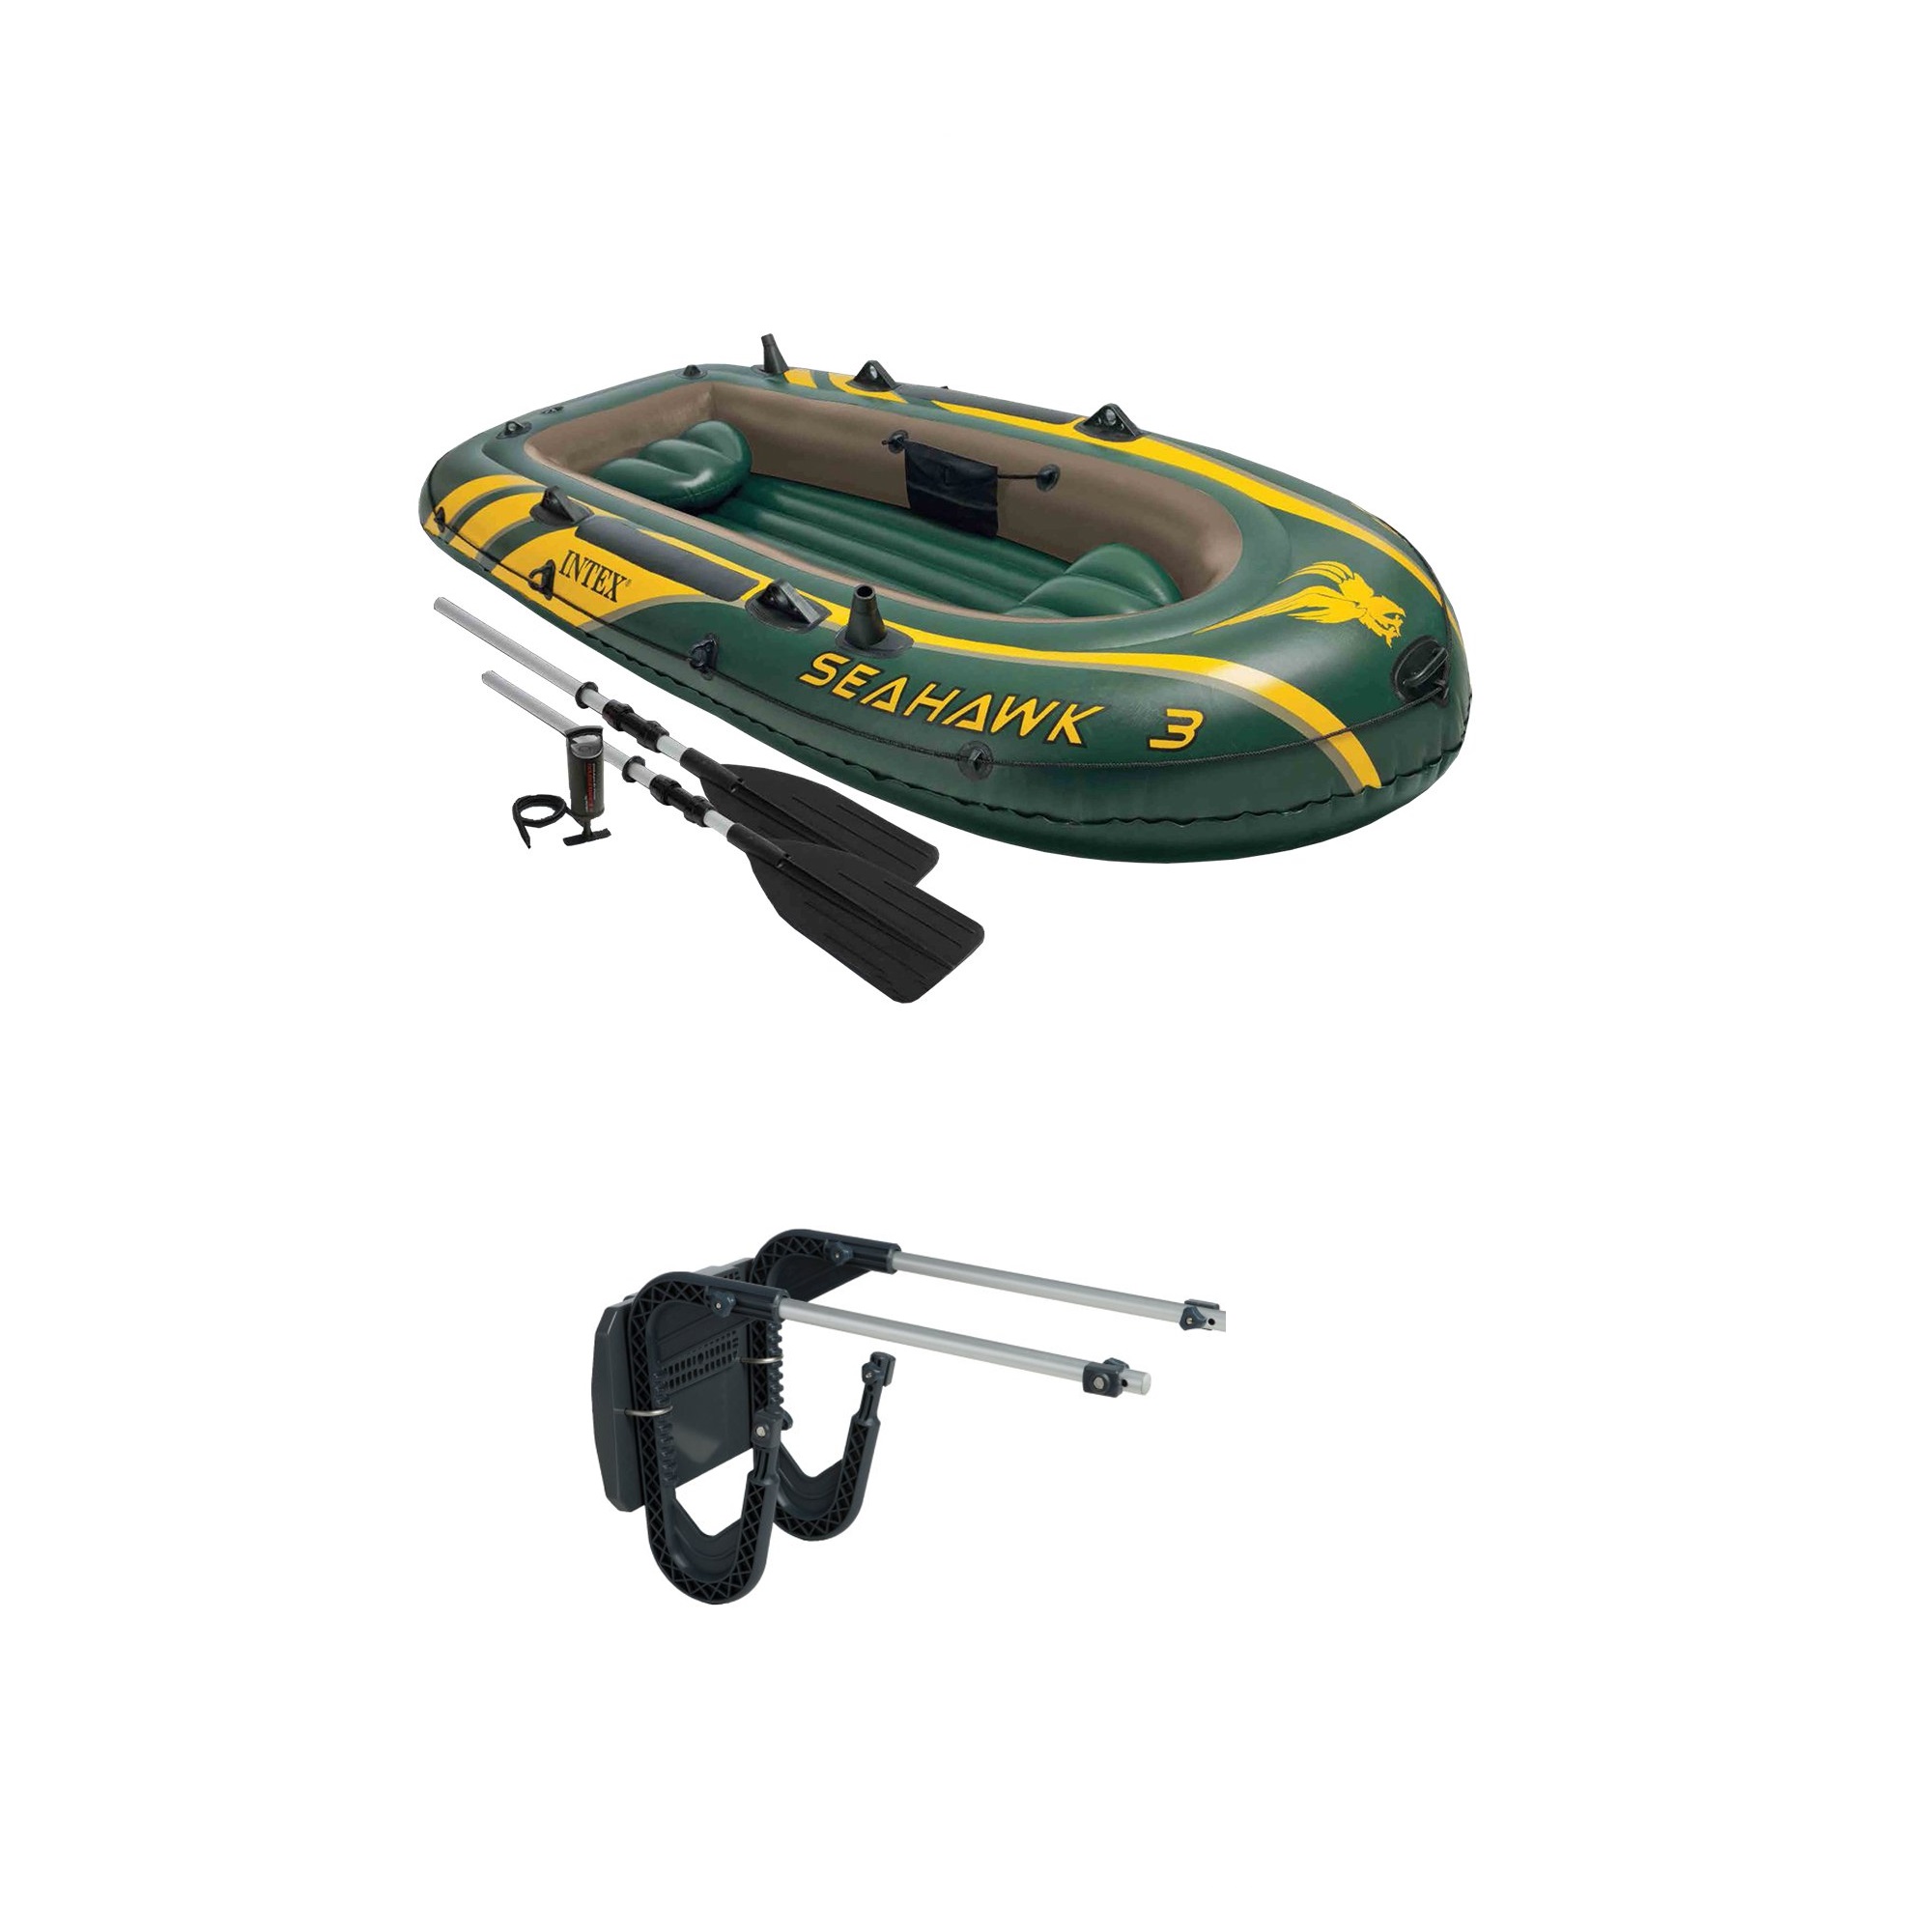 Intex 3 Person Boat Set w/ Aluminum Oars & Pump and Composite Boat Motor Mount - Click1Get2 Coupon